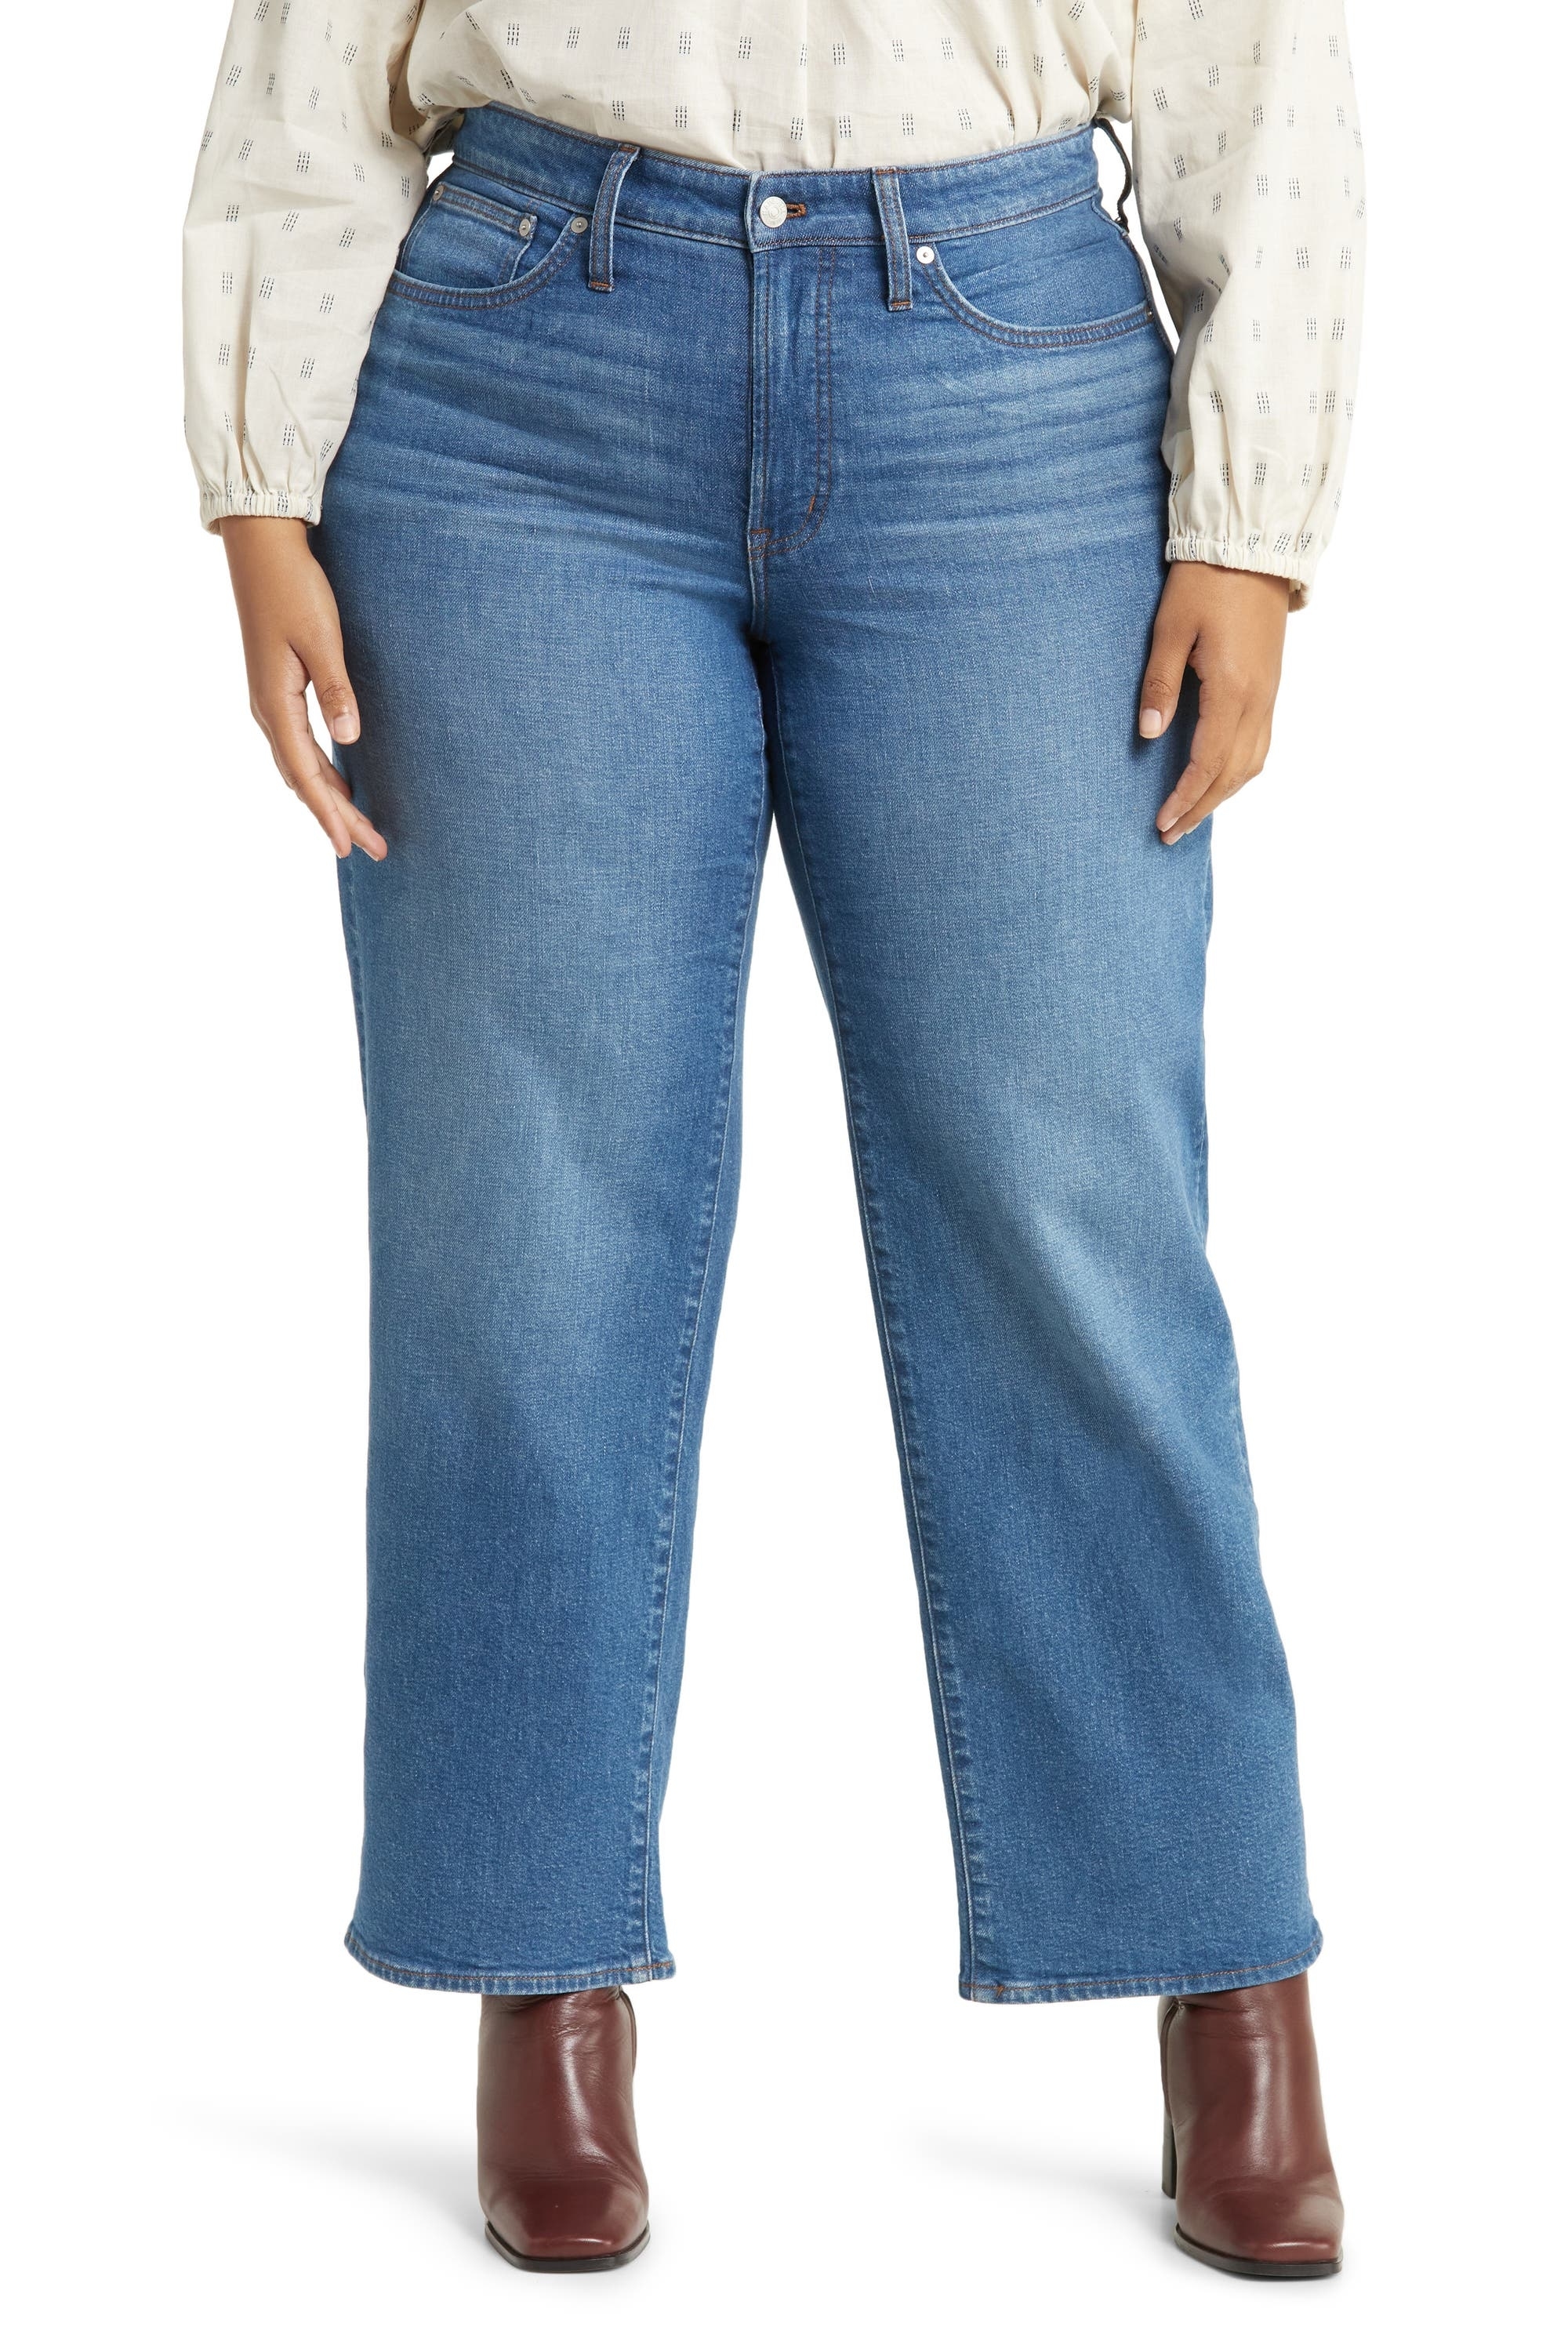 model in medium wash wide-legged jeans